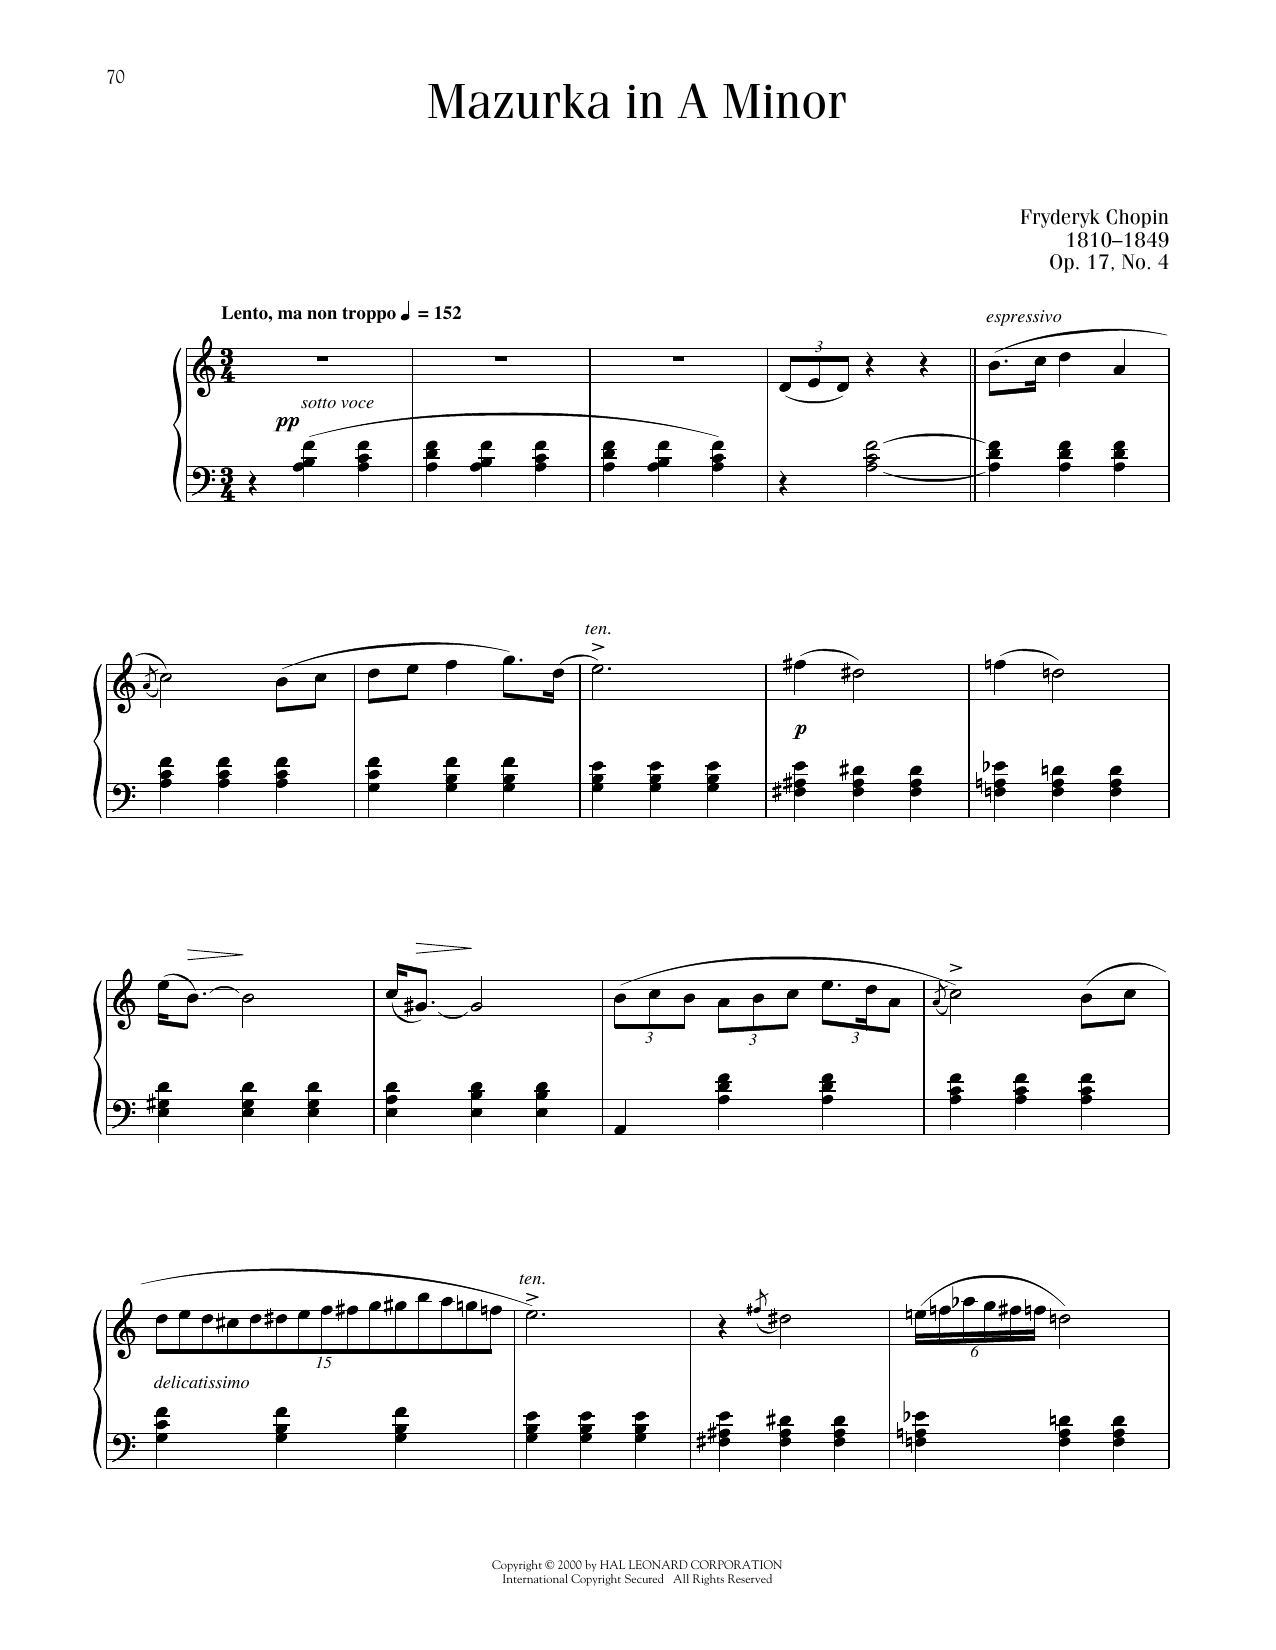 Frederic Chopin Mazurka In A Minor, KK IIb, No. 4 sheet music notes printable PDF score